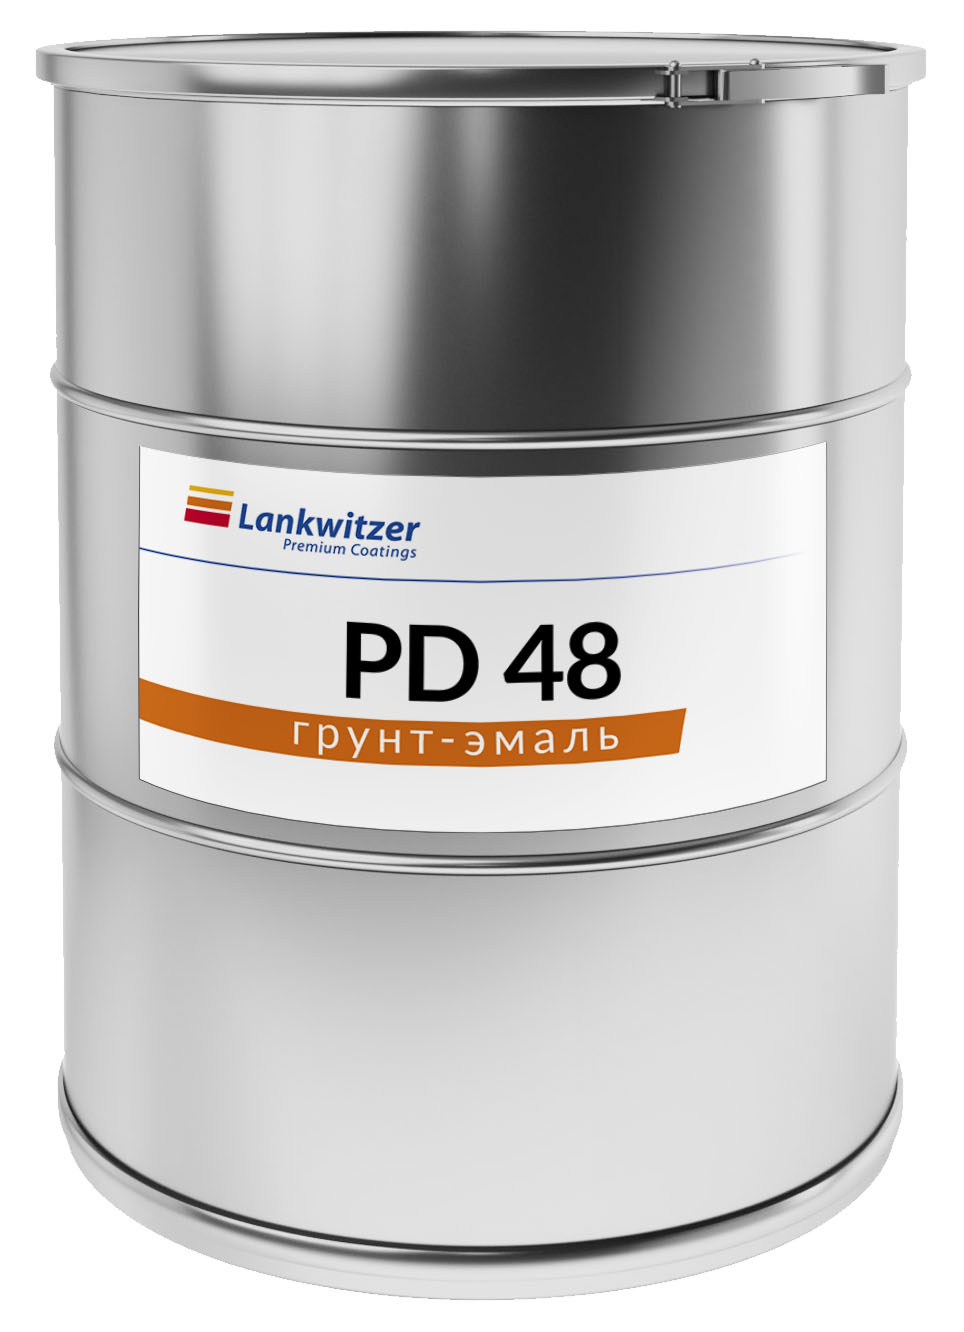 PD 48 грунт-эмаль